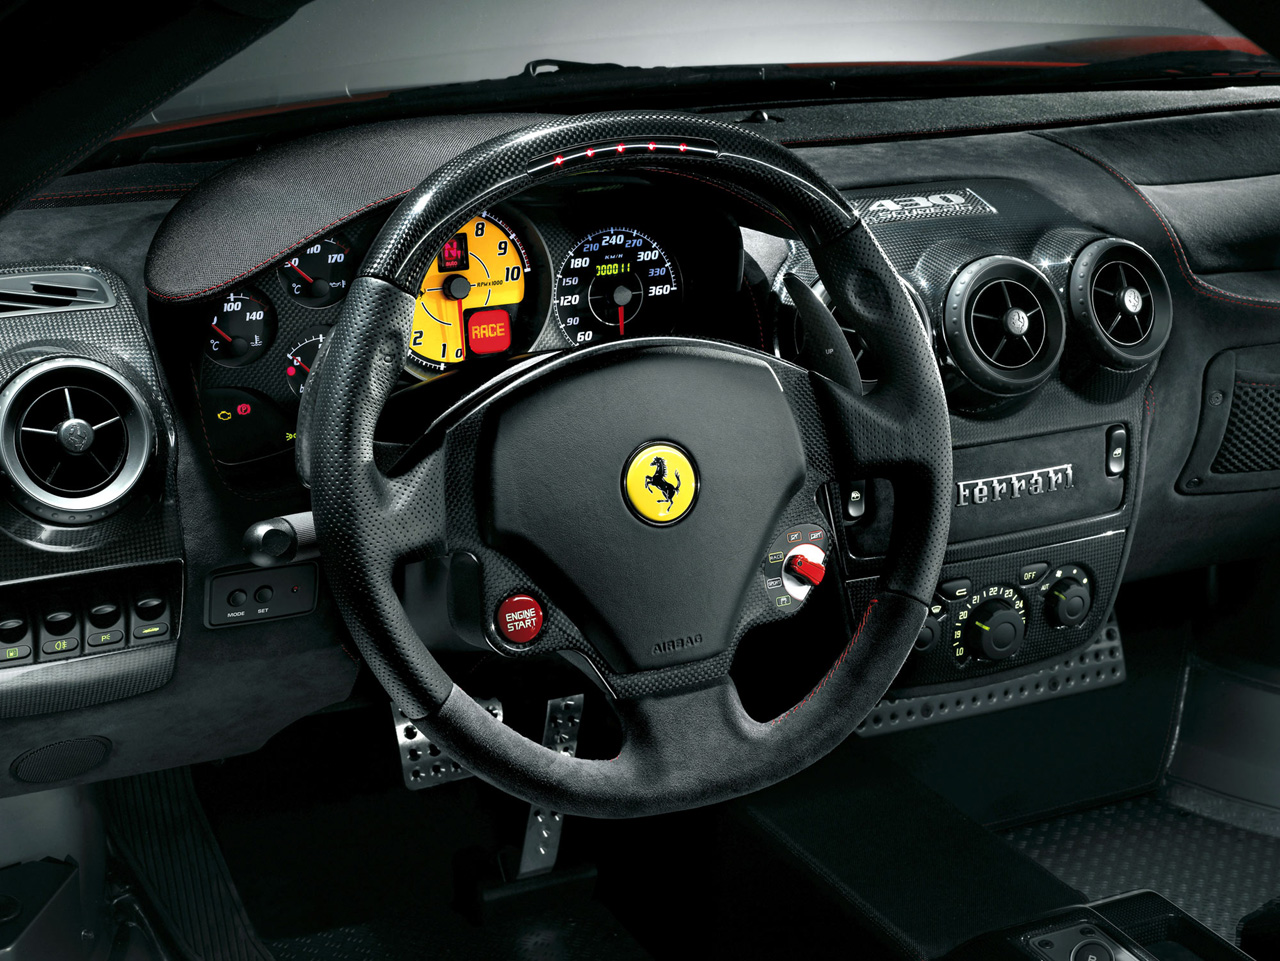 Ferrari f430 wallpapers